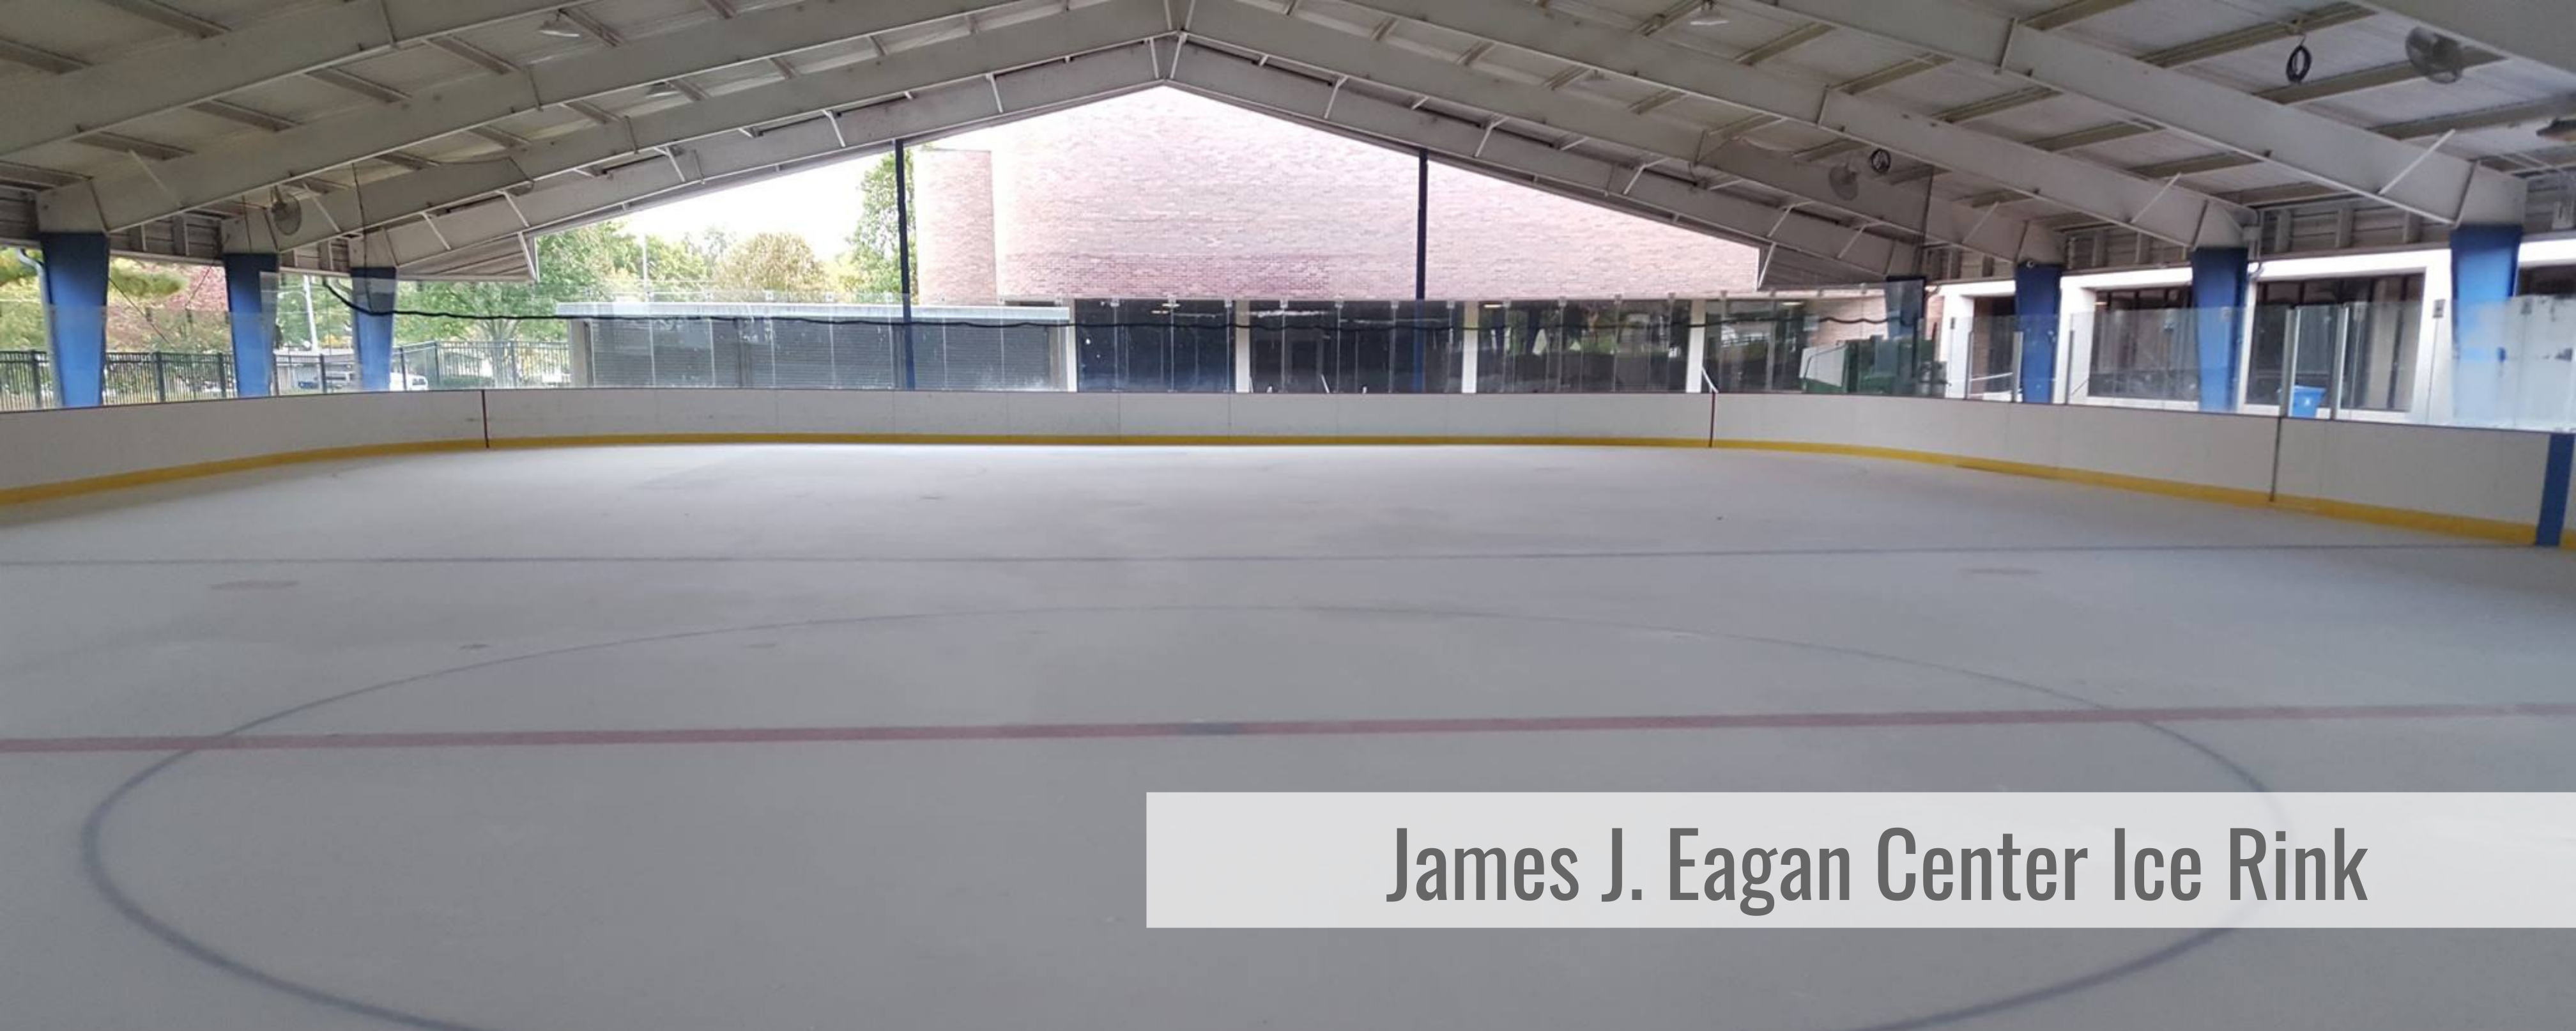 James J. Eagan Center Ice Rink